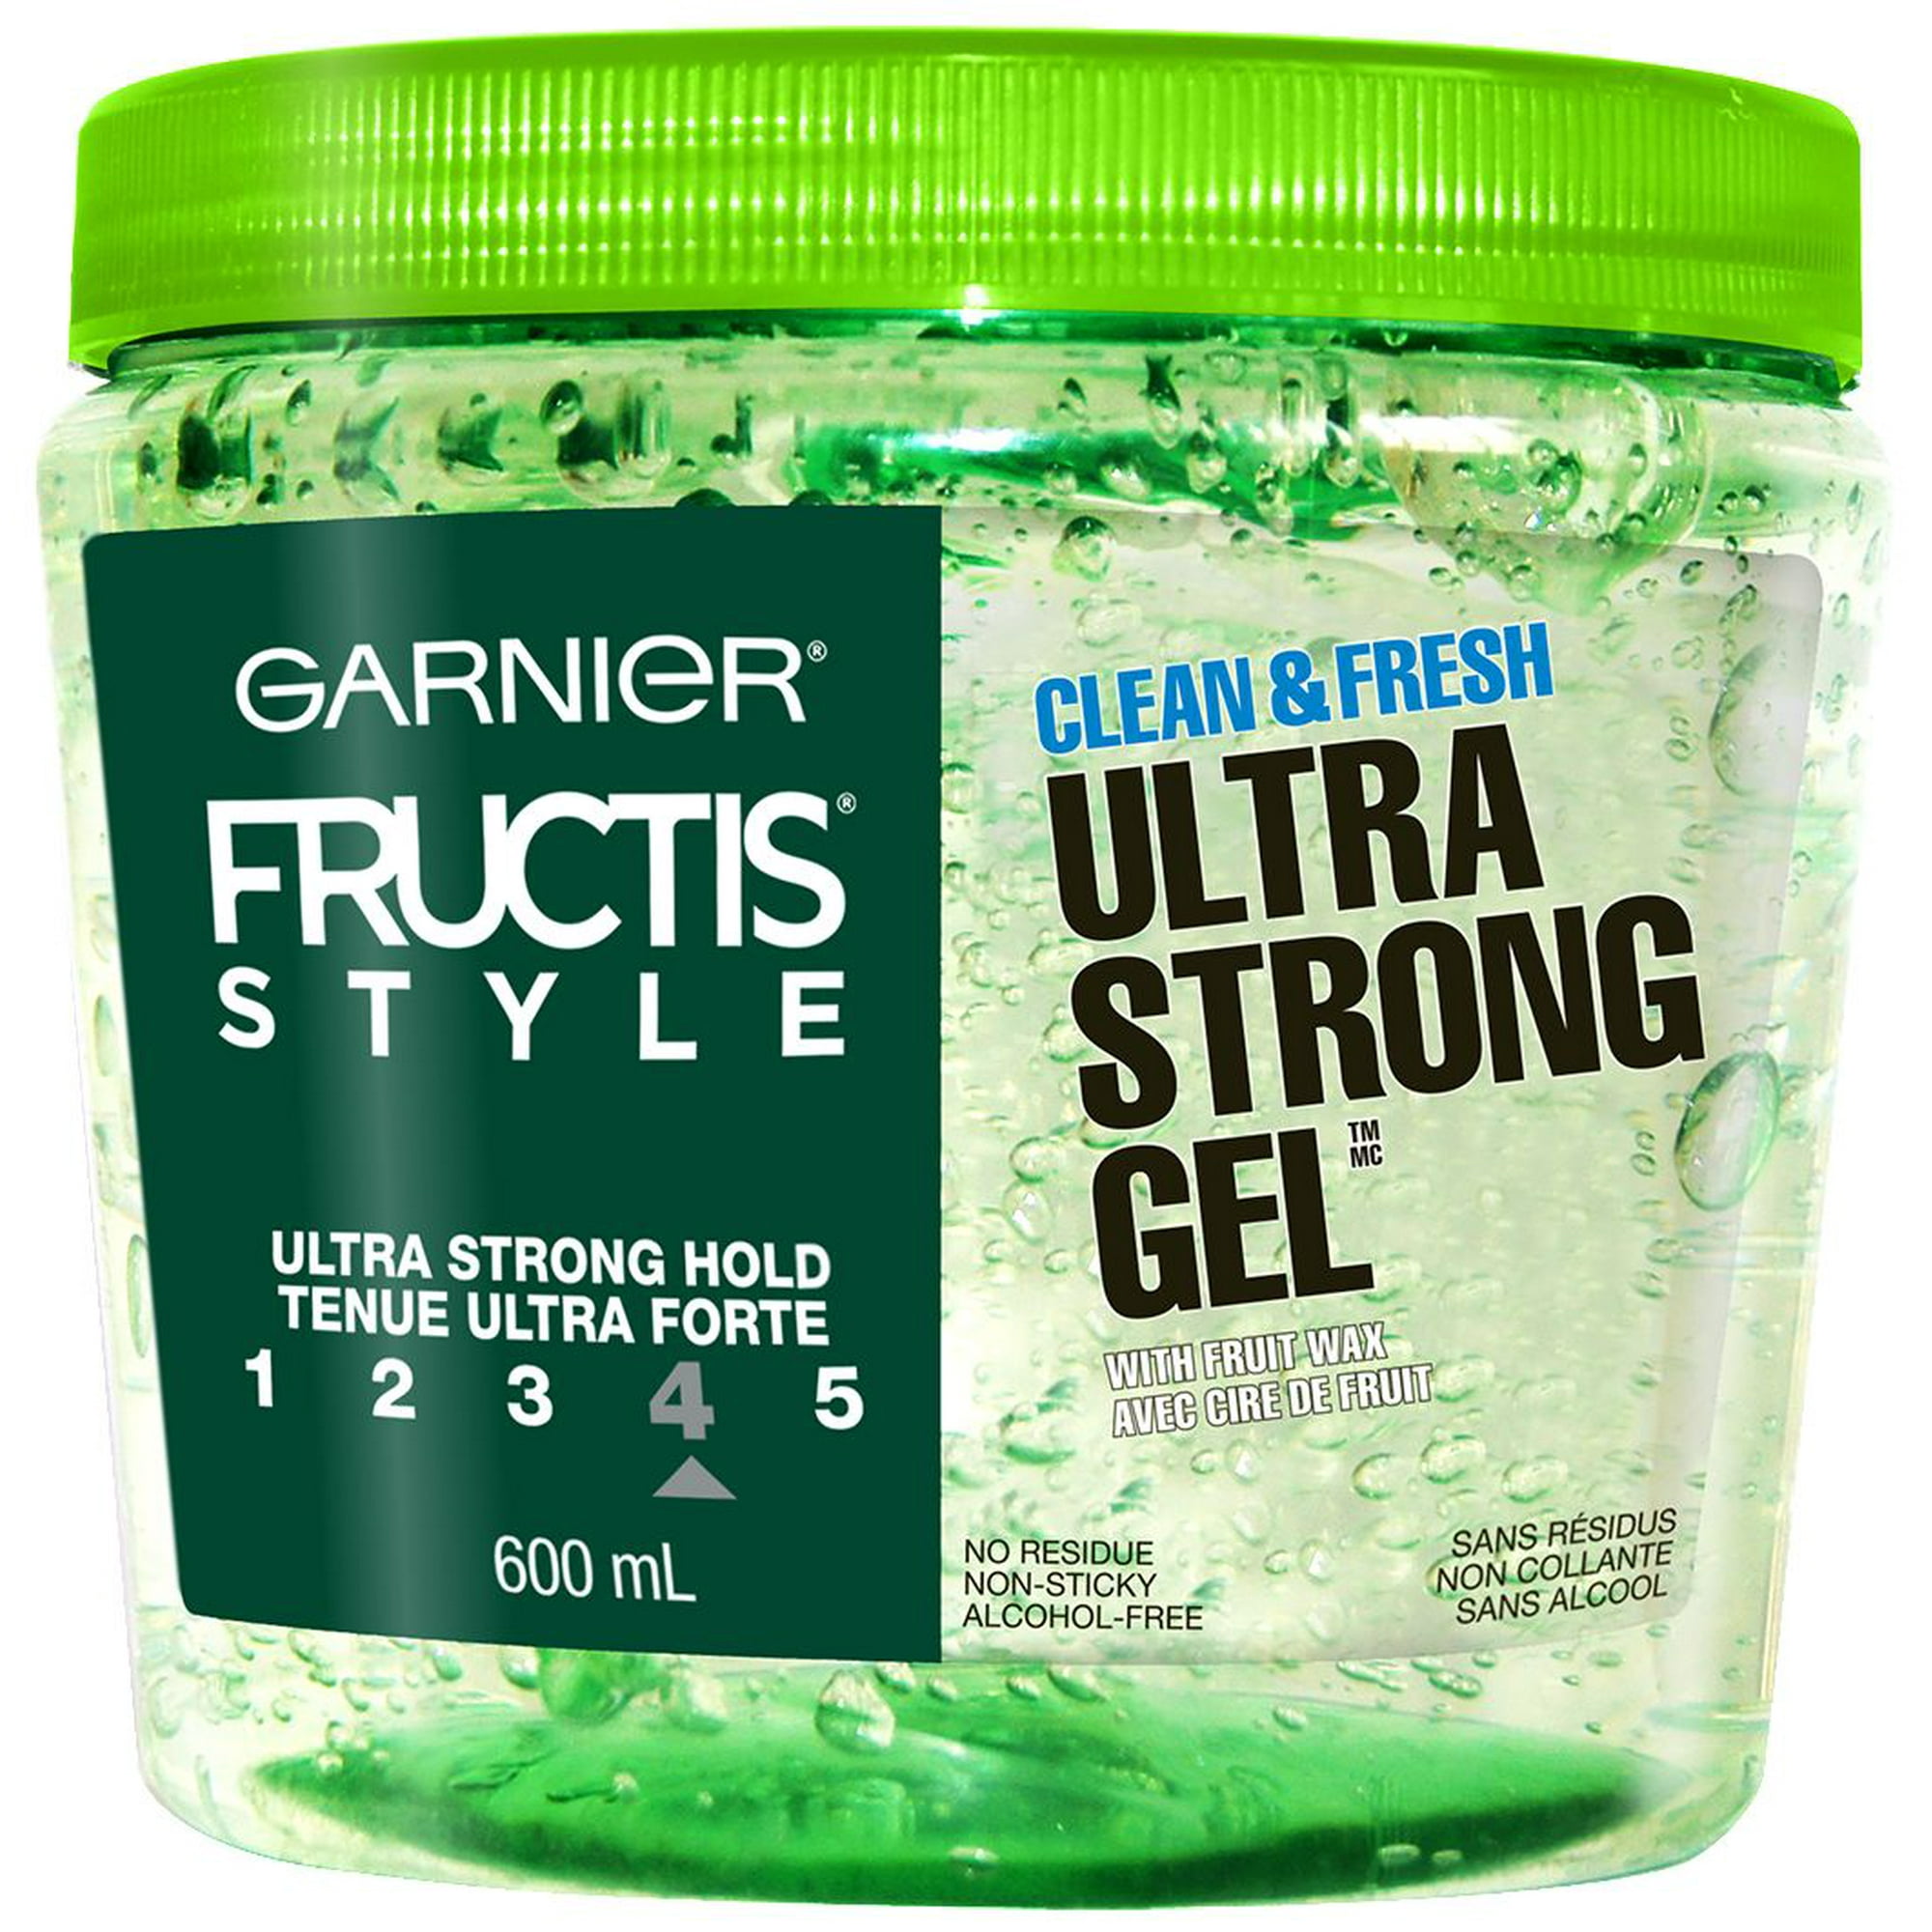 Garnier Fructis Styling Gels, Survivor Ultimate Hair Styling Gel, 600 ML